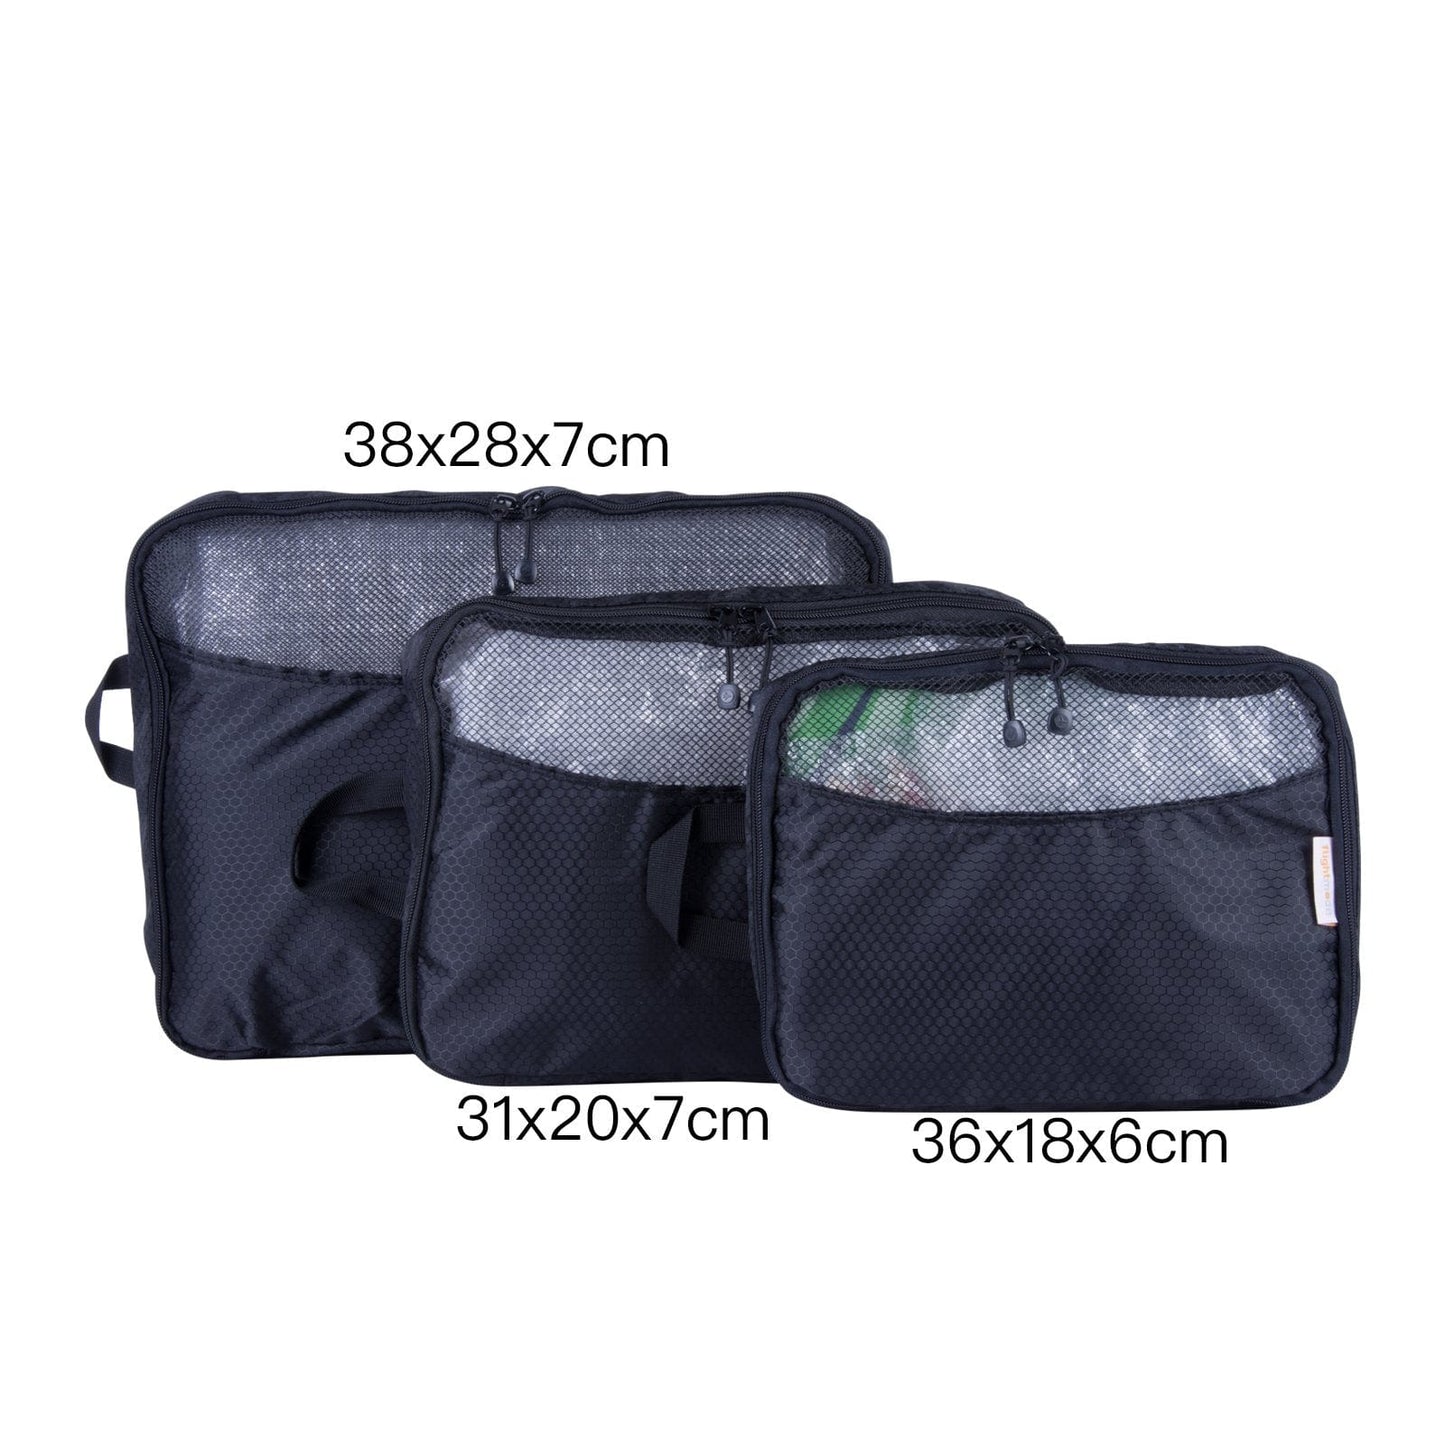 3 Pcs Travel Luggage Waterproof Organizer Storage Set